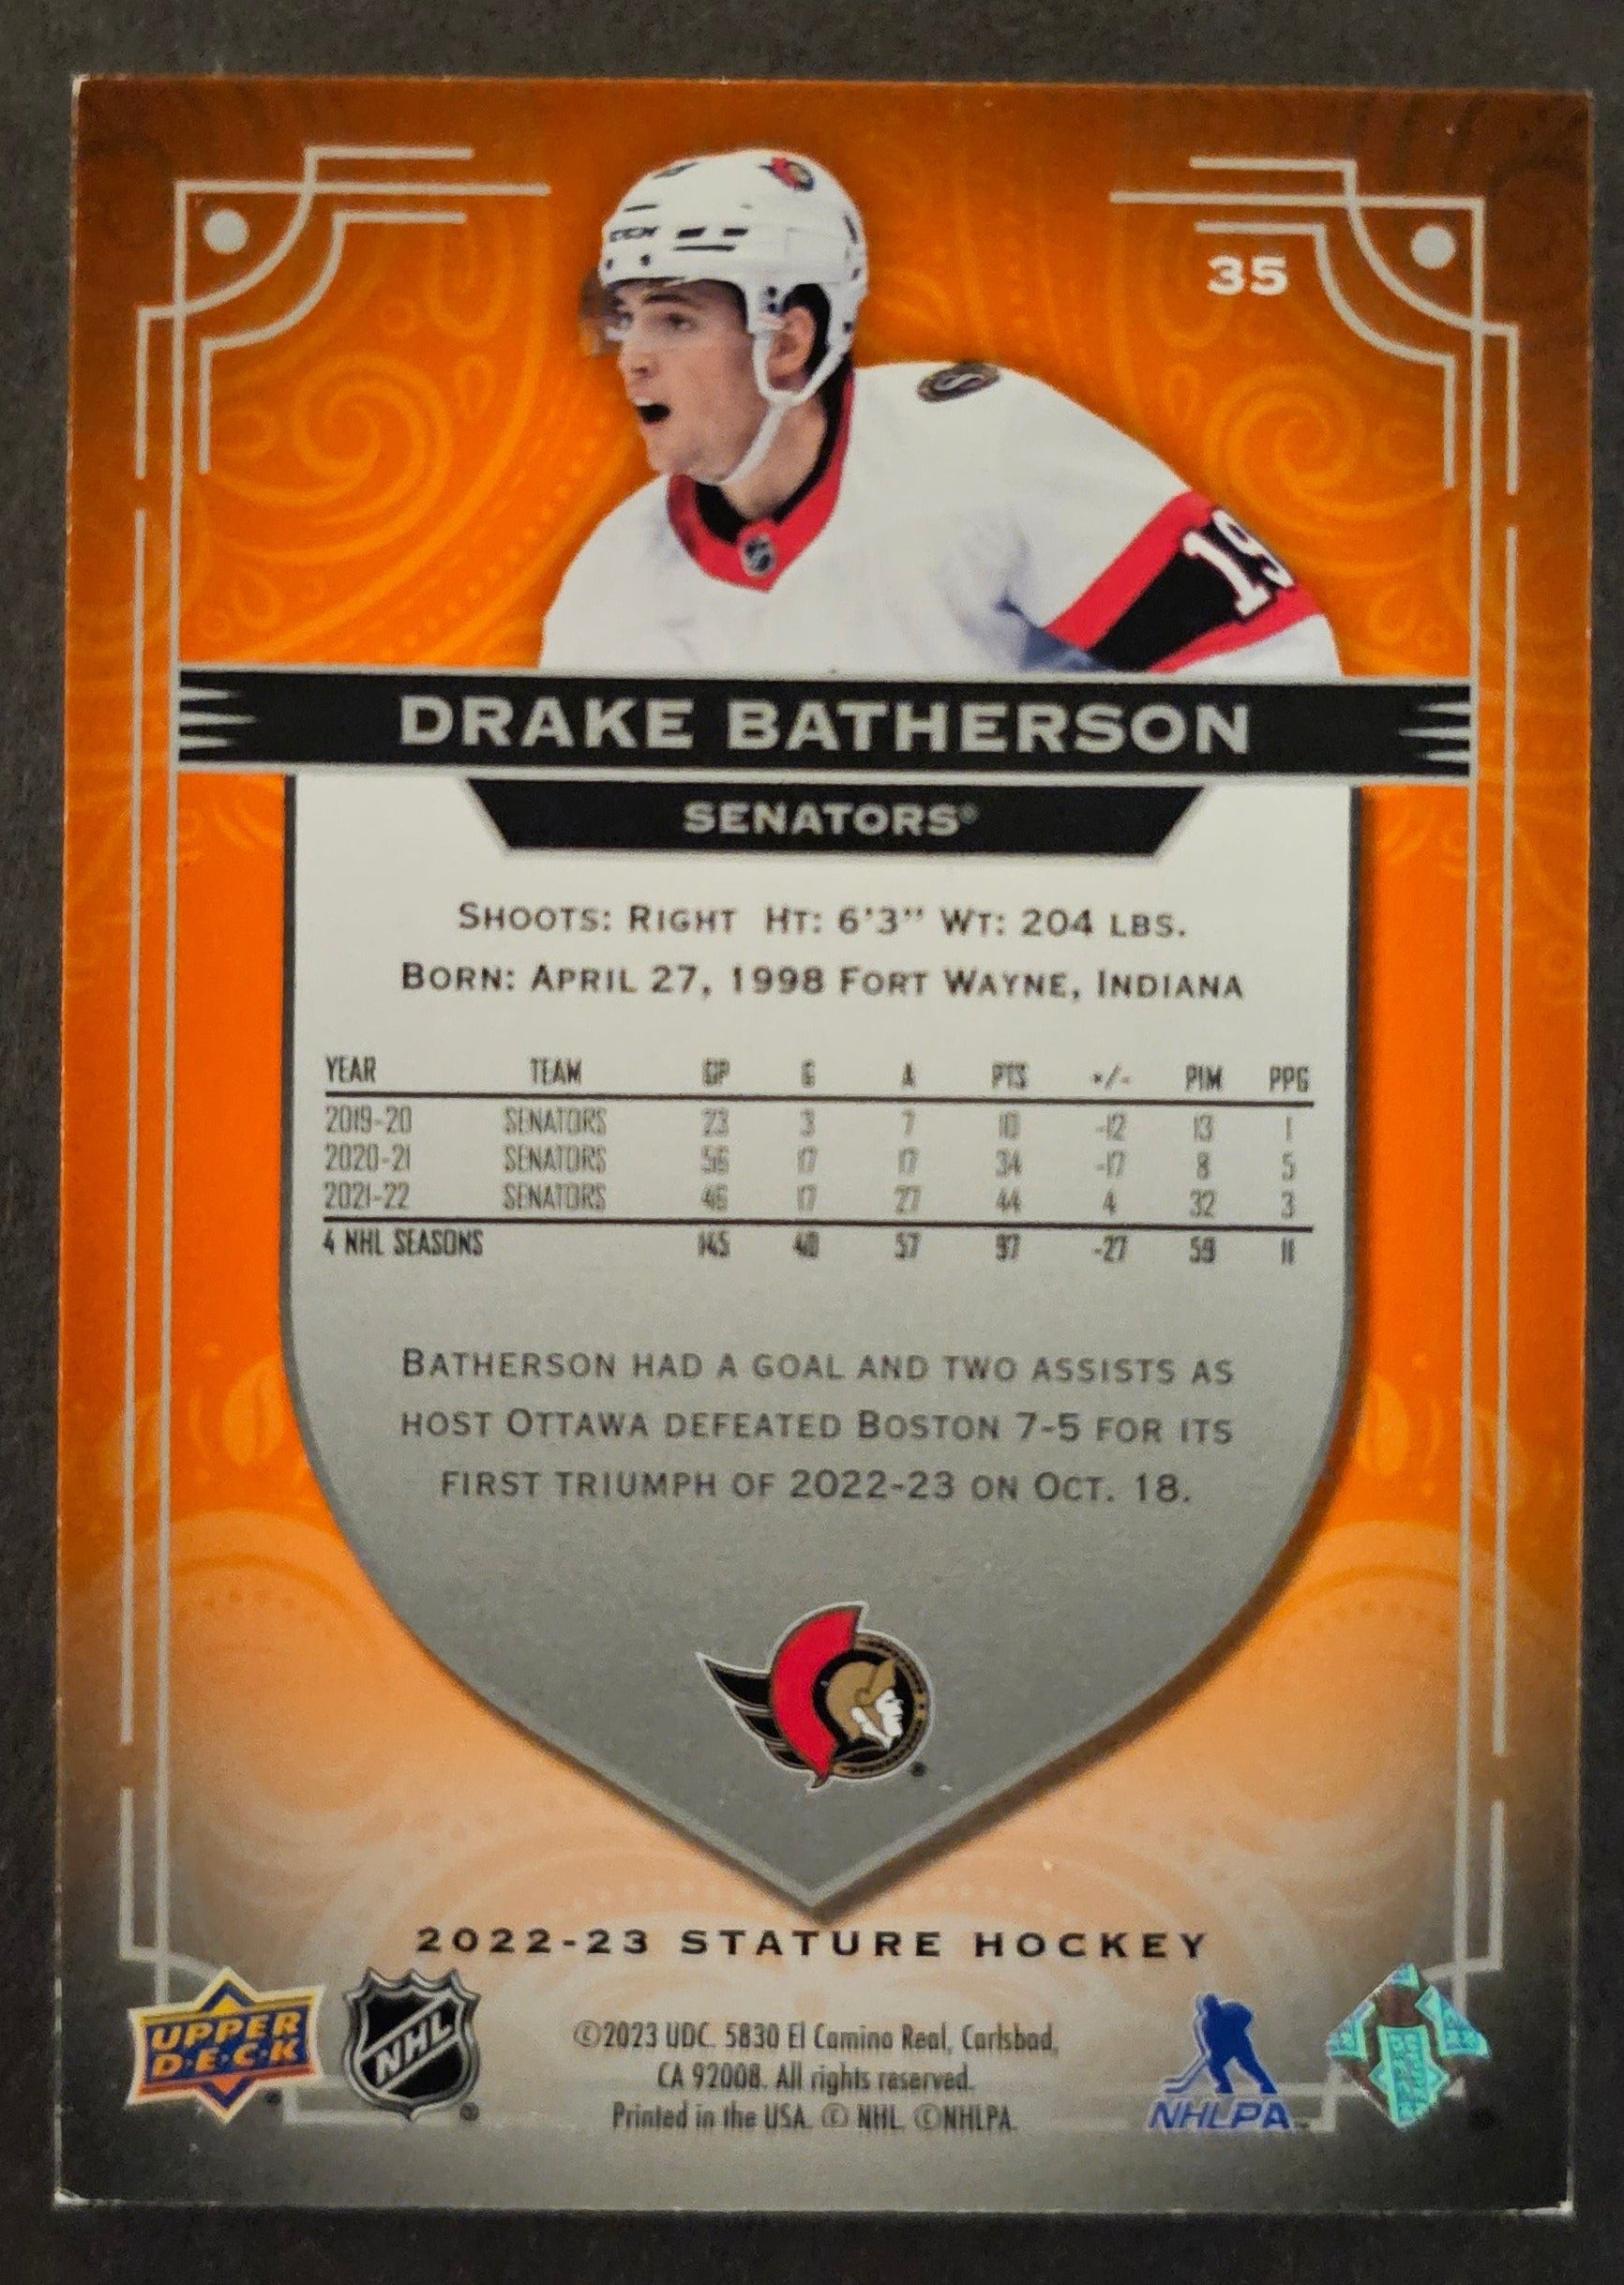 Drake Batherson Photo Variant Orange /25 - 2022/23 Stature